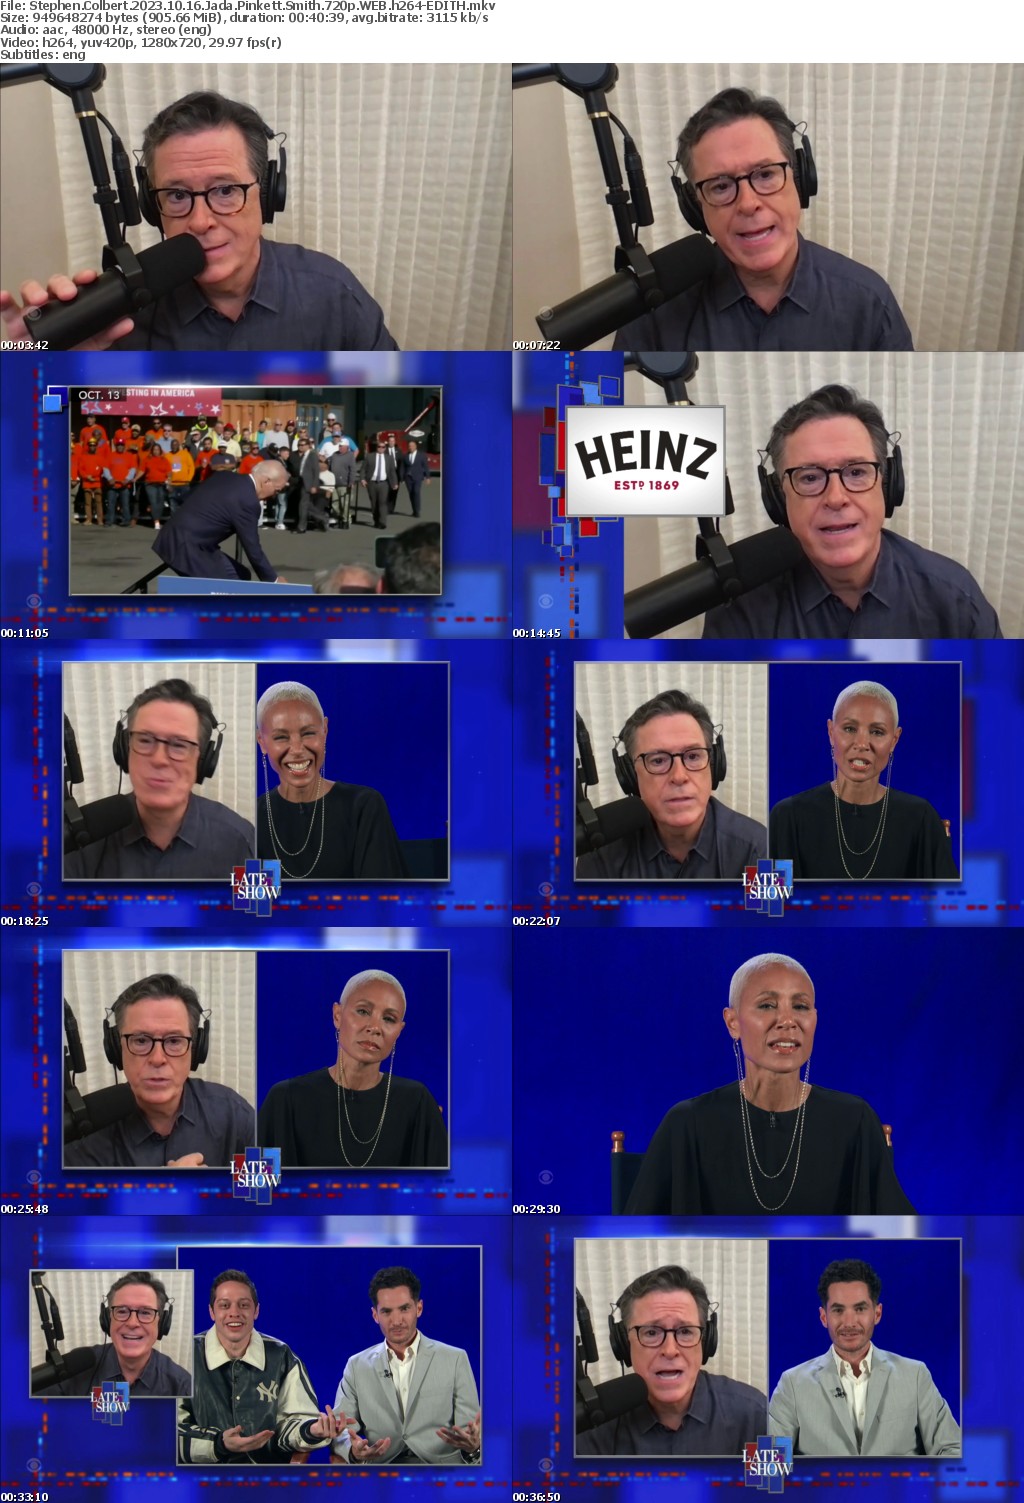 Stephen Colbert 2023 10 16 Jada Pinkett Smith 720p WEB h264-EDITH